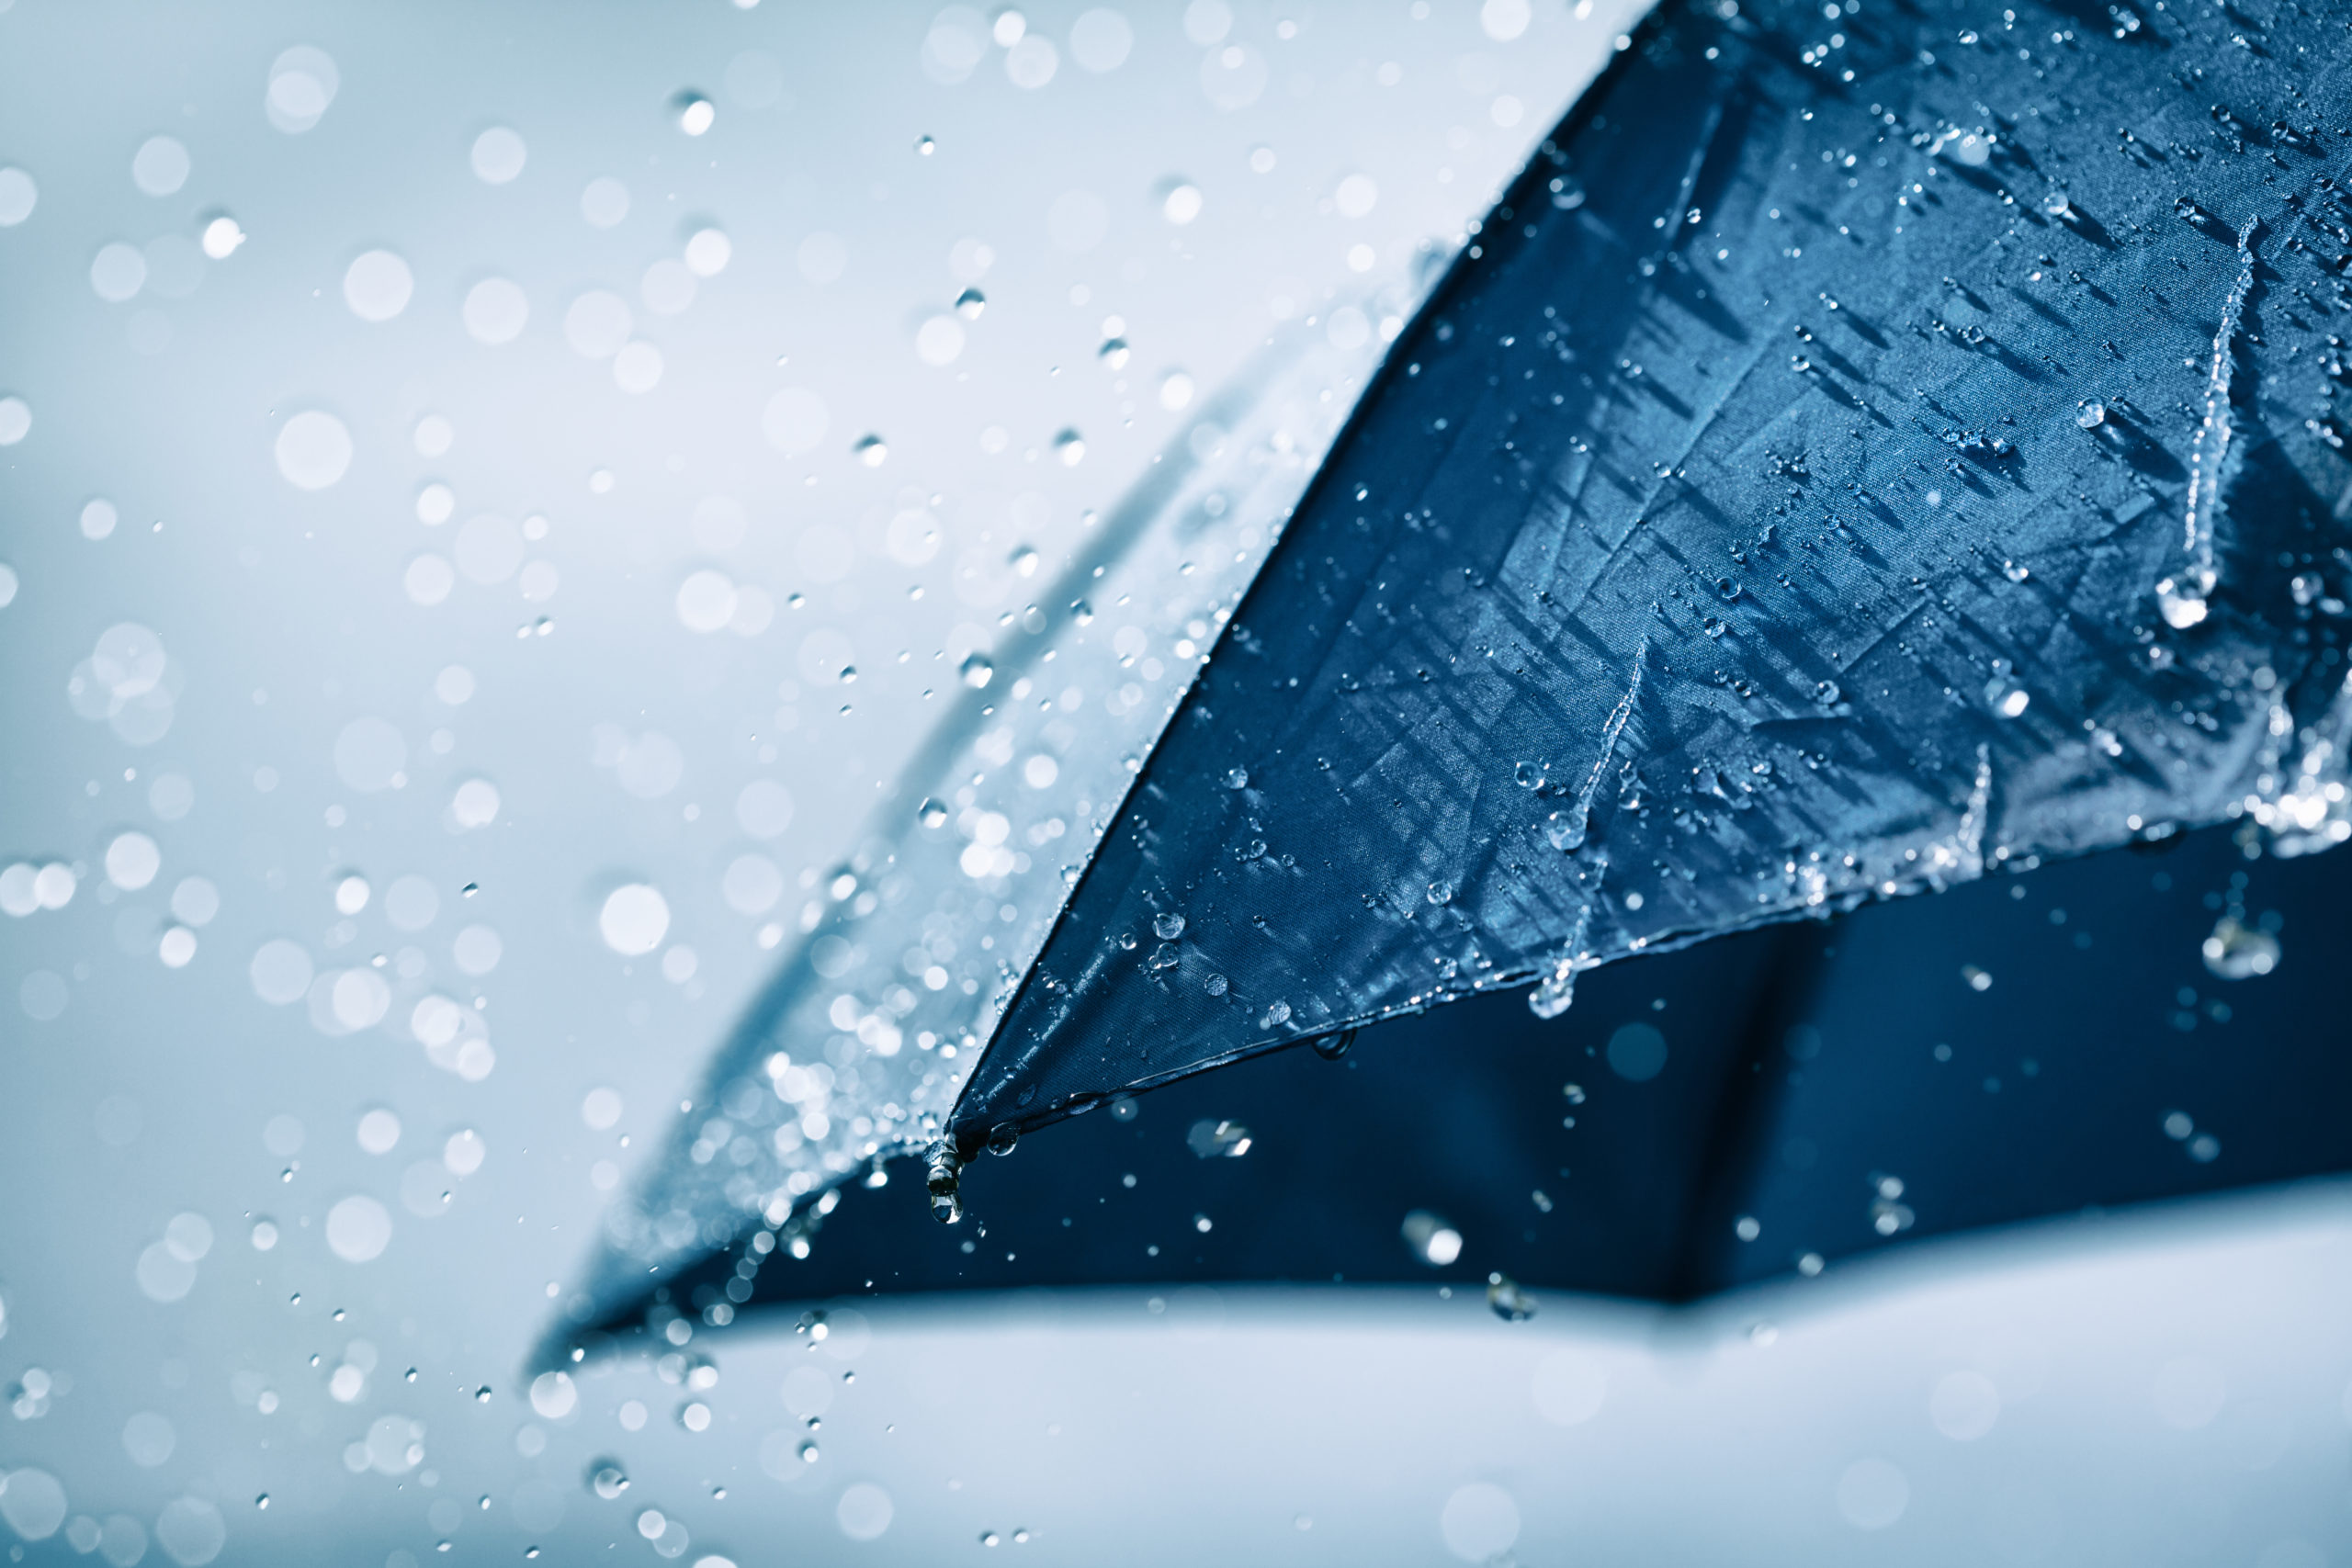 Blue umbrella under heavy rain against cloudy sky background. Rainy weather concept.